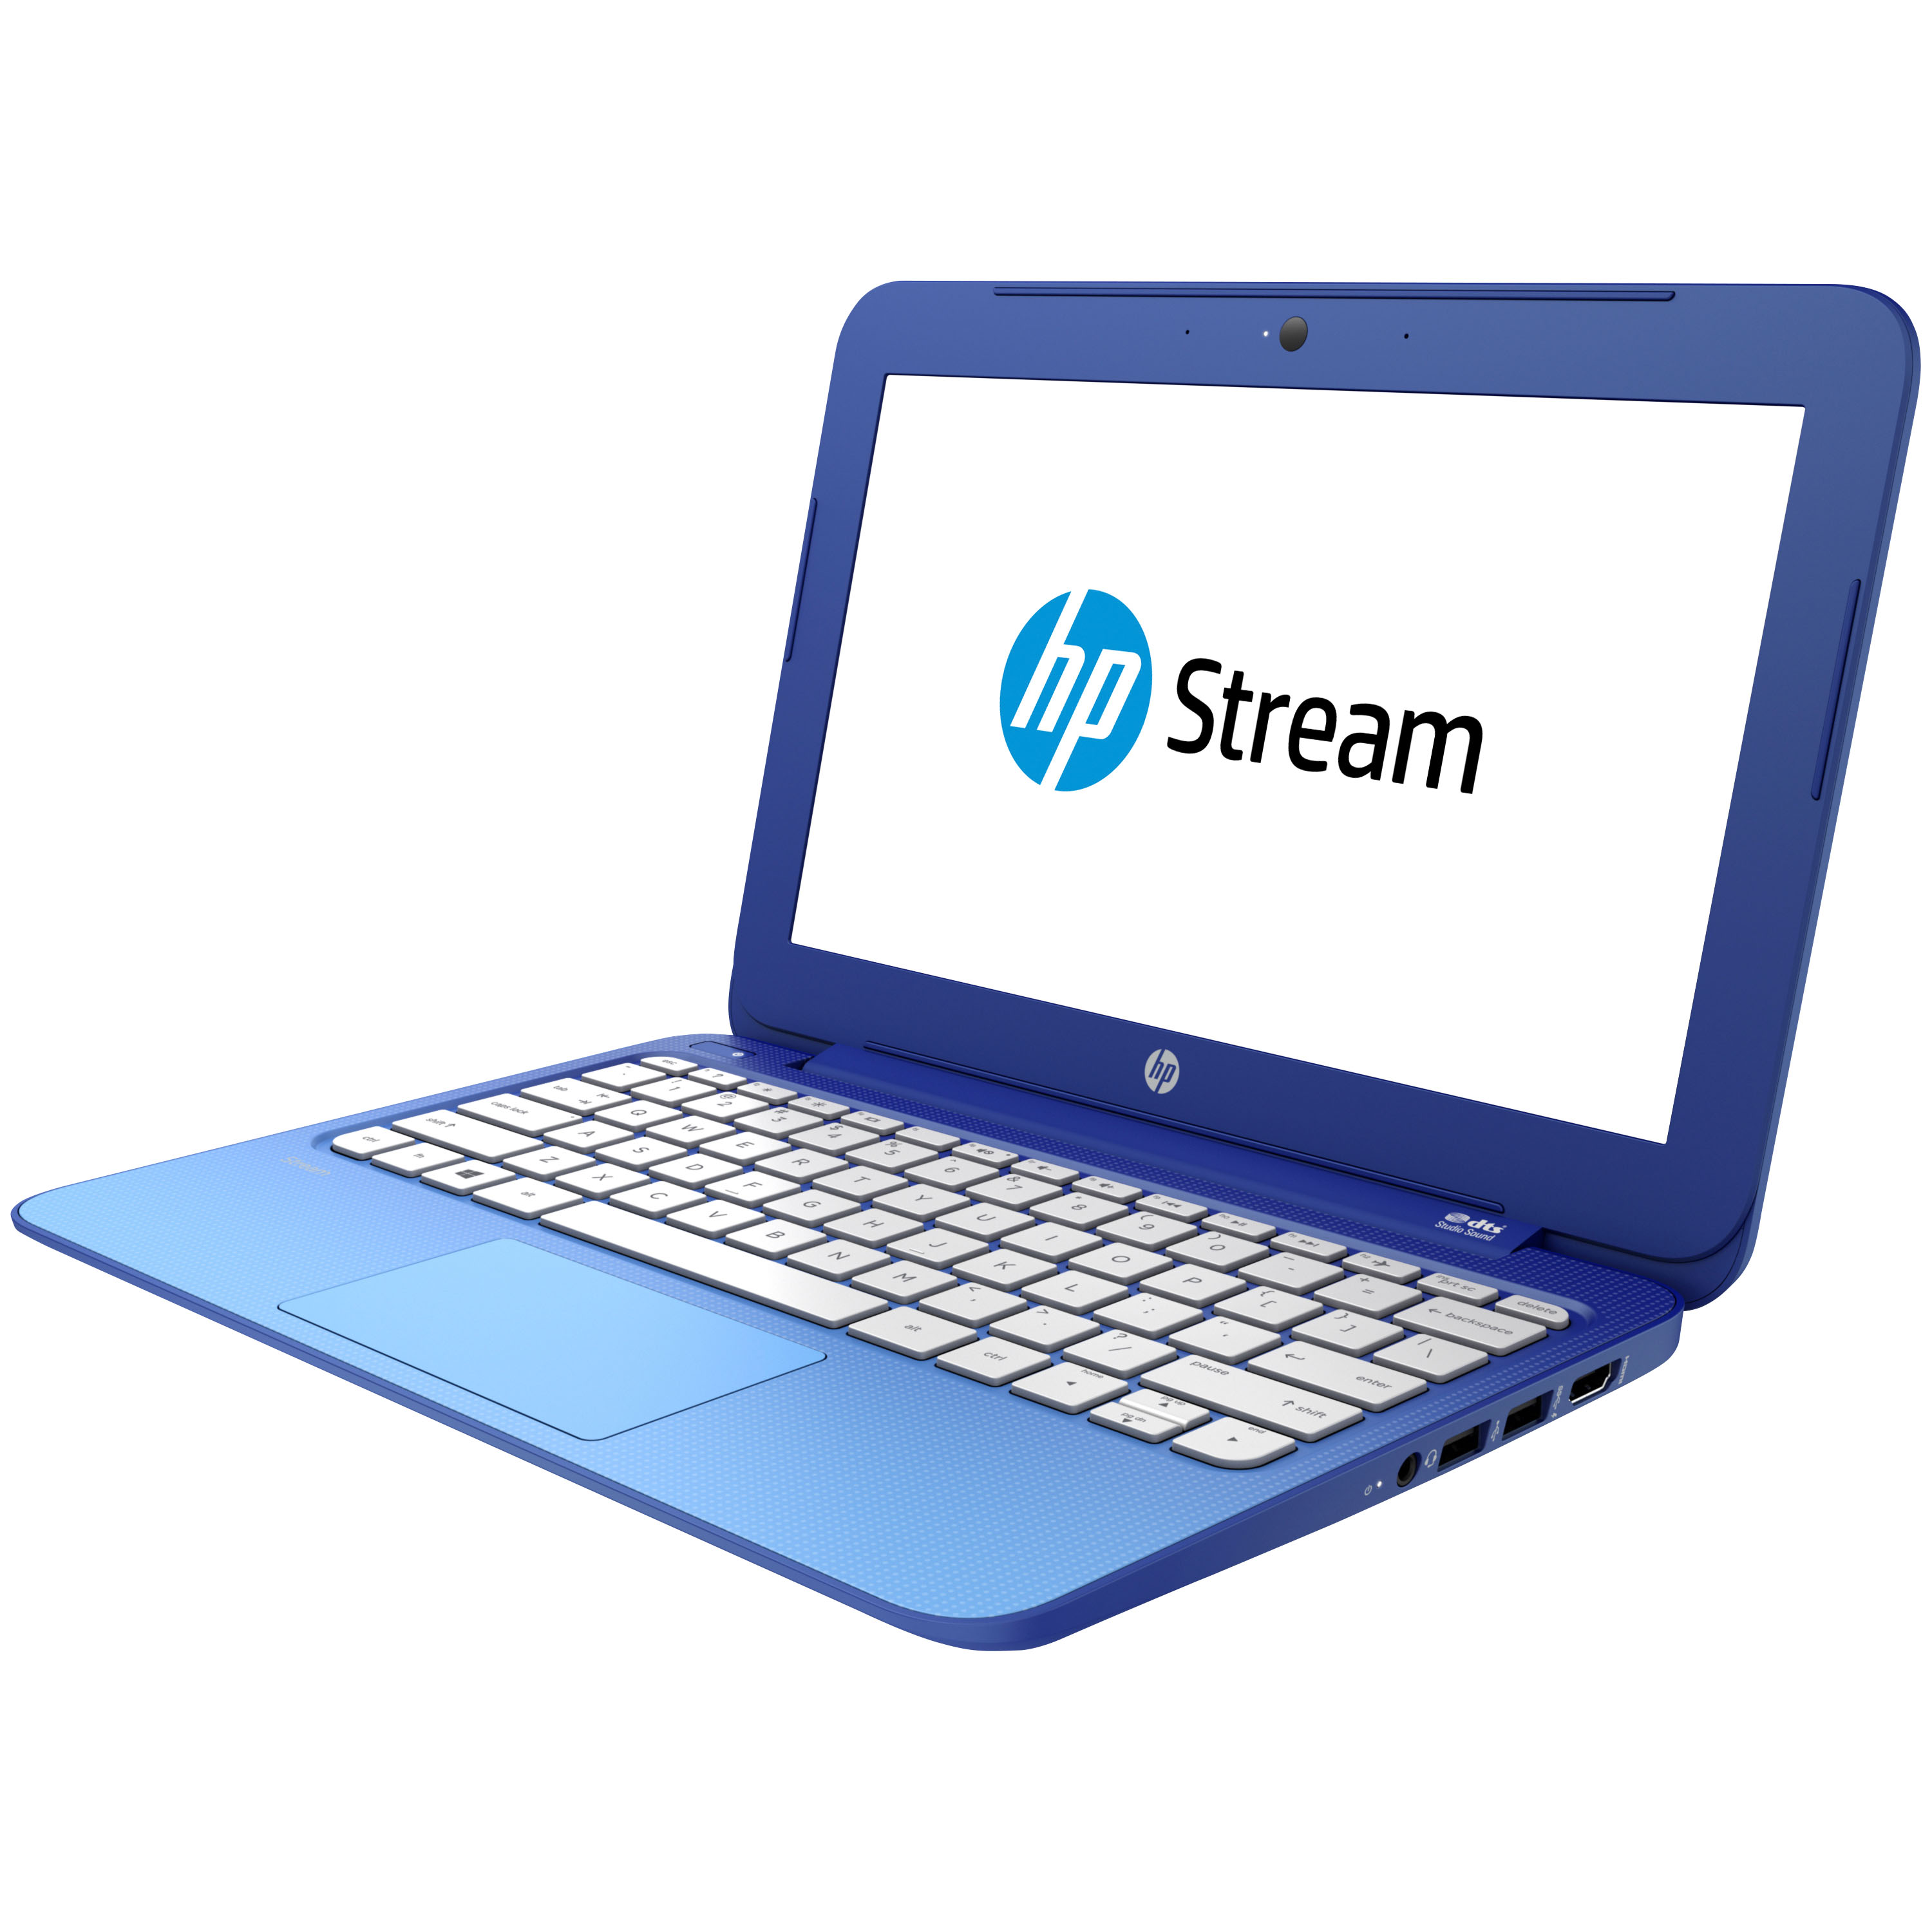 HP Stream 11-r000ng Subnotebook Review - NotebookCheck.net Reviews